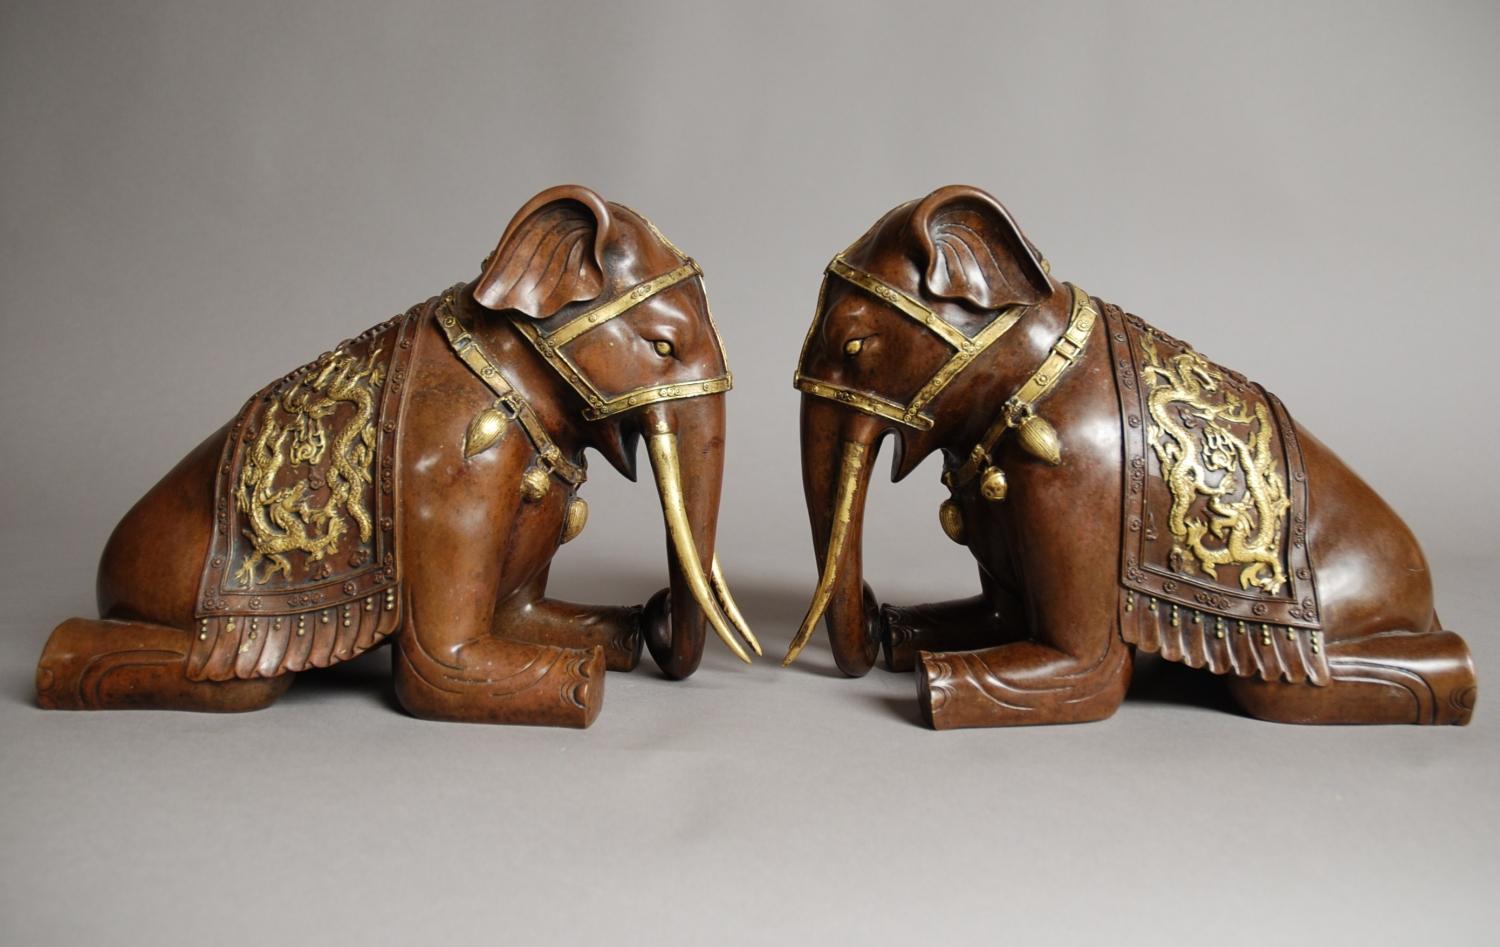 Pair of Chinese bronze & gilt elephants